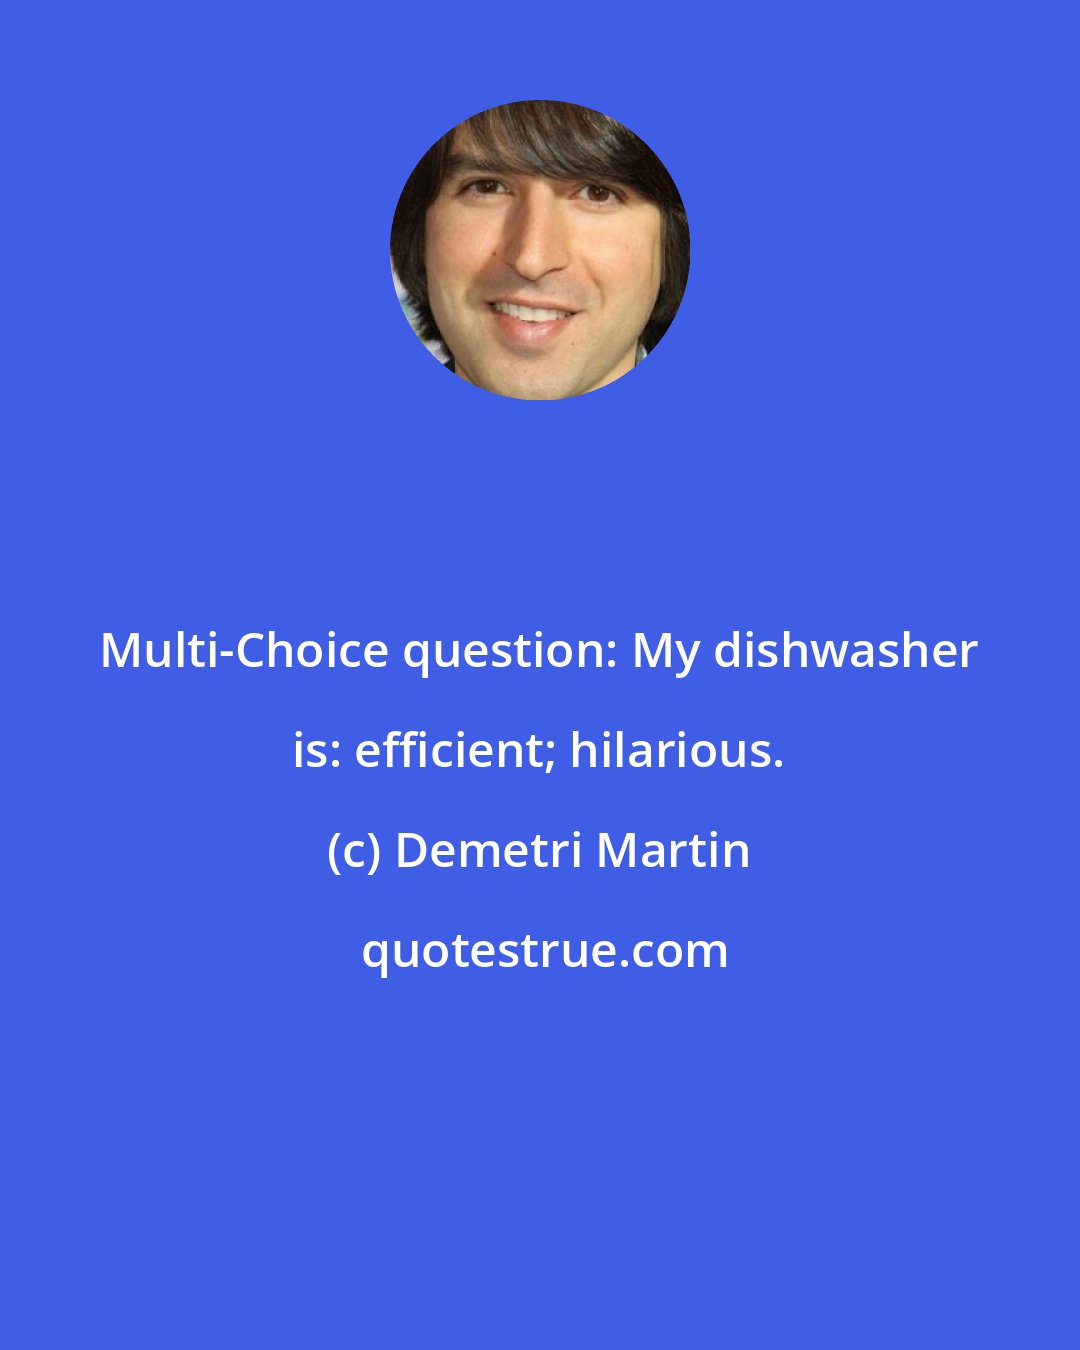 Demetri Martin: Multi-Choice question: My dishwasher is: efficient; hilarious.